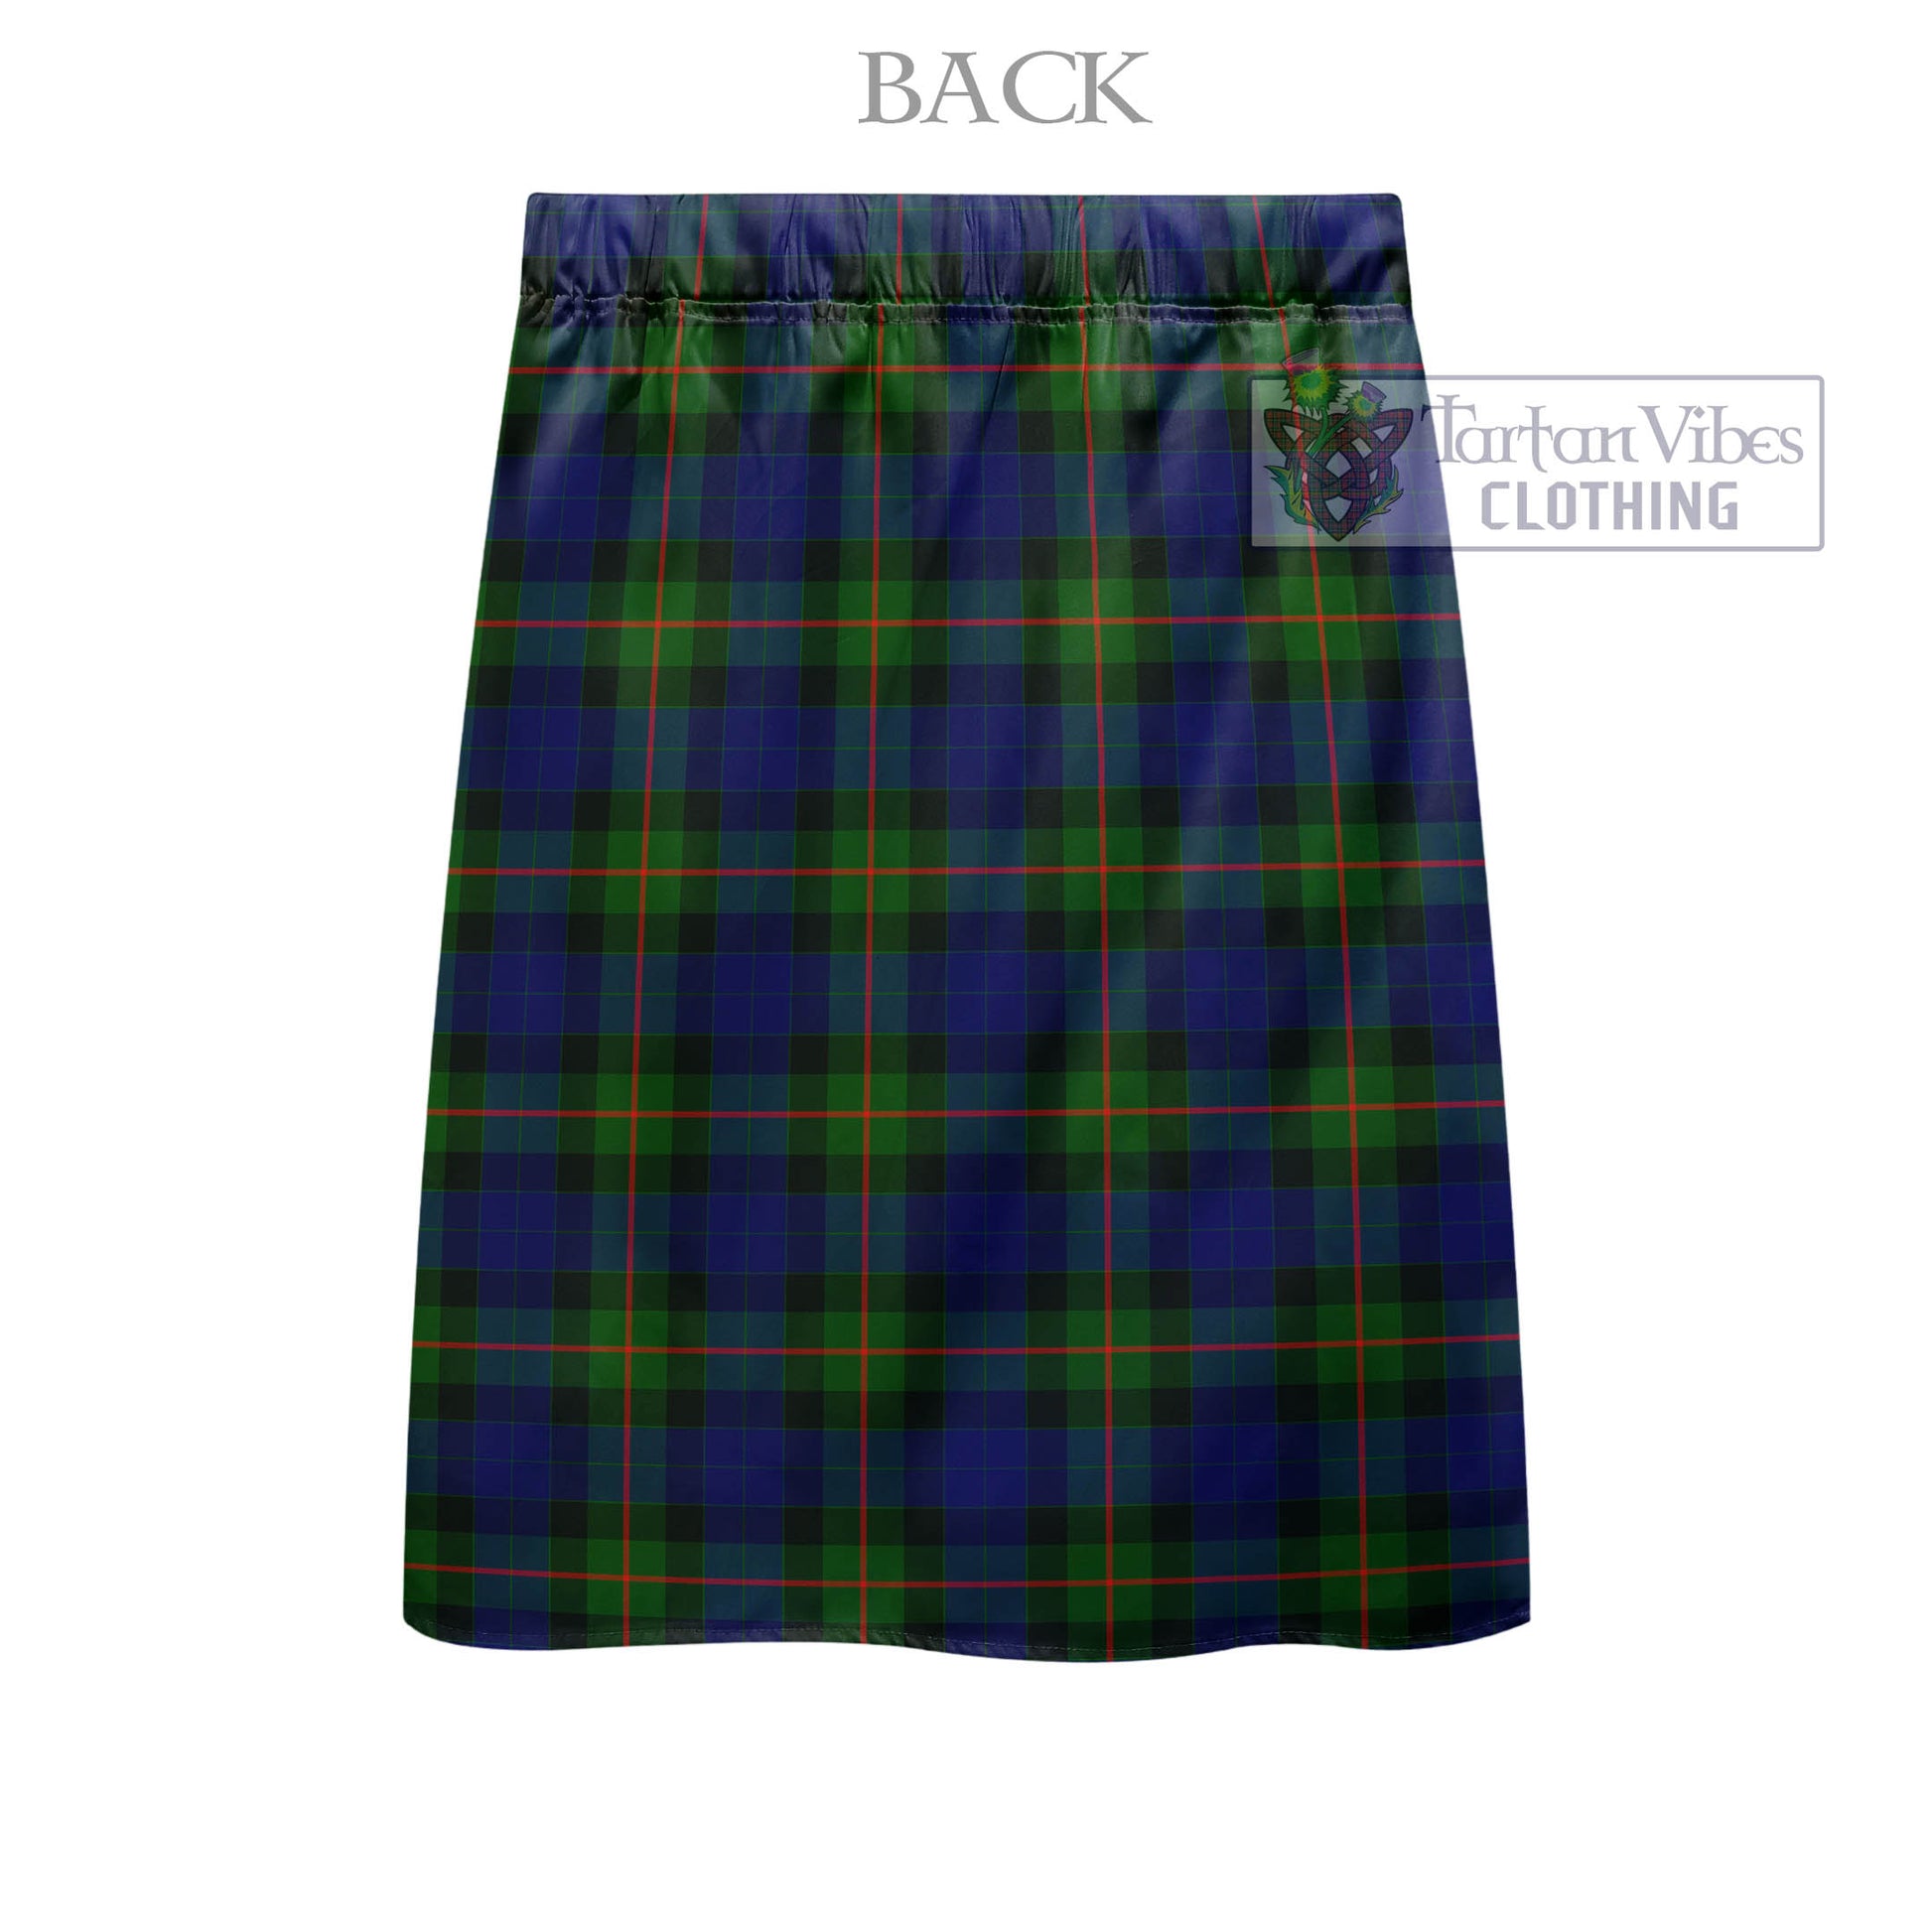 Tartan Vibes Clothing Jamieson Tartan Men's Pleated Skirt - Fashion Casual Retro Scottish Style